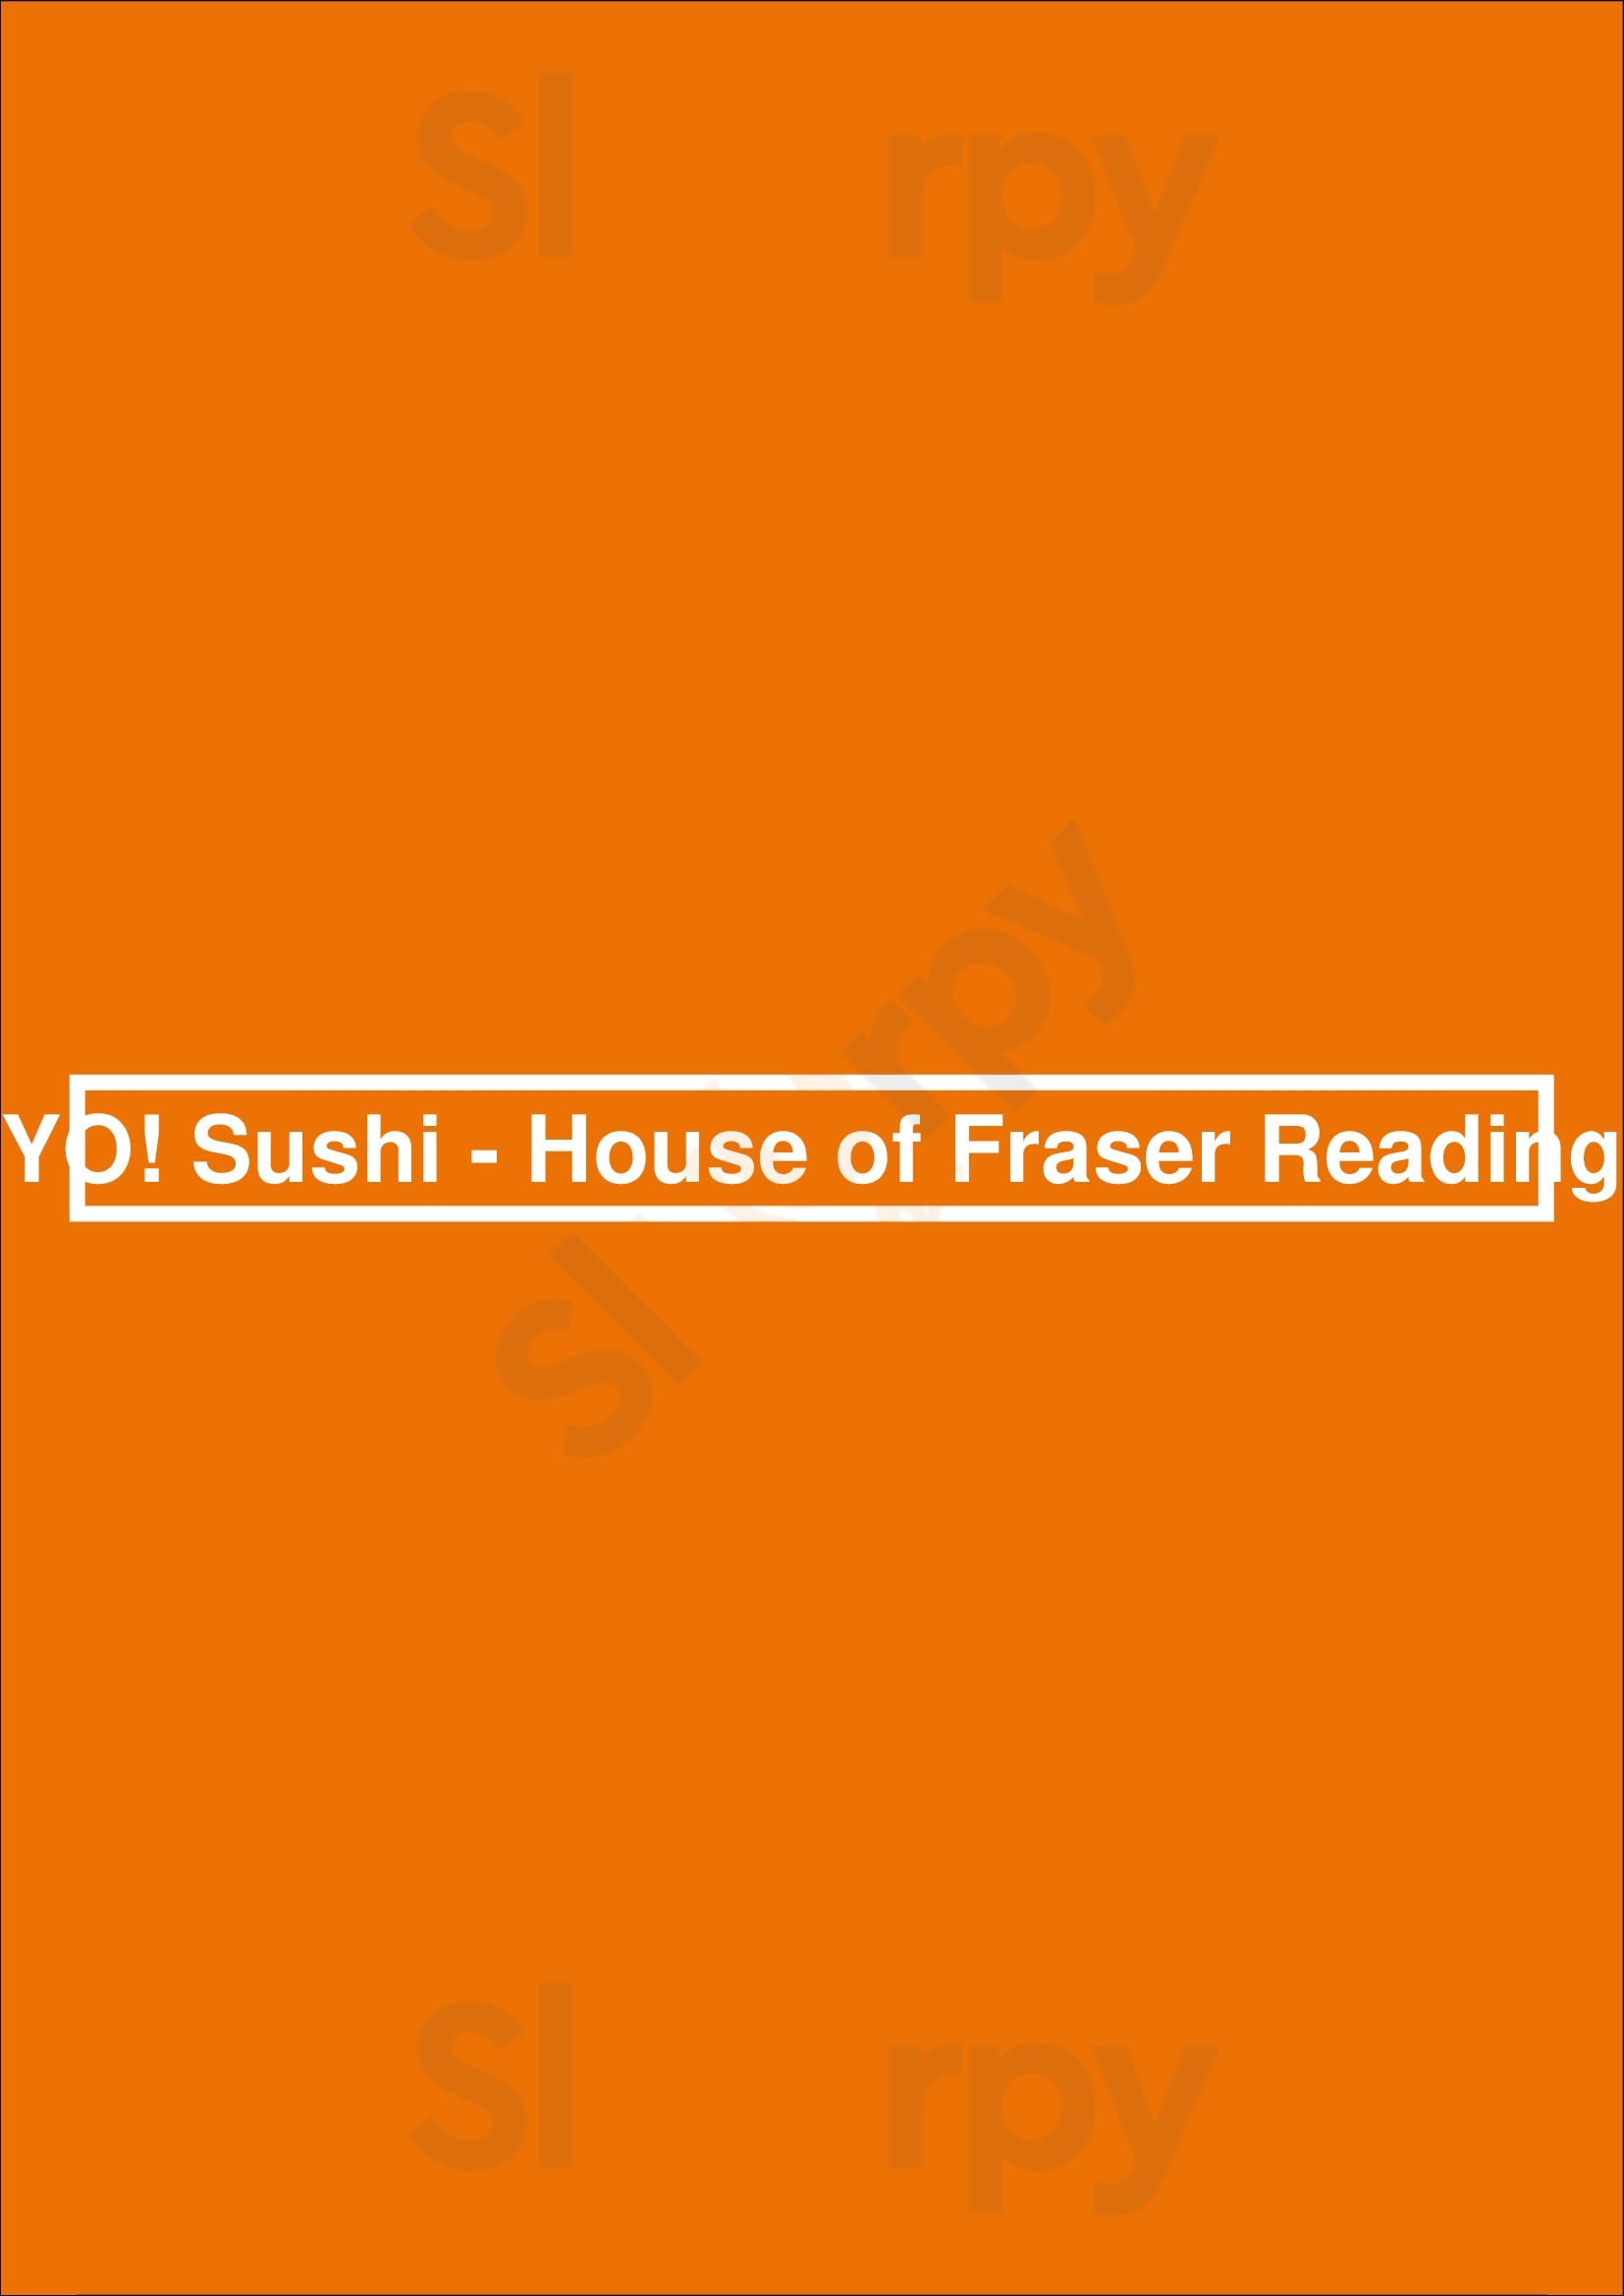 Yo! Sushi Reading Menu - 1